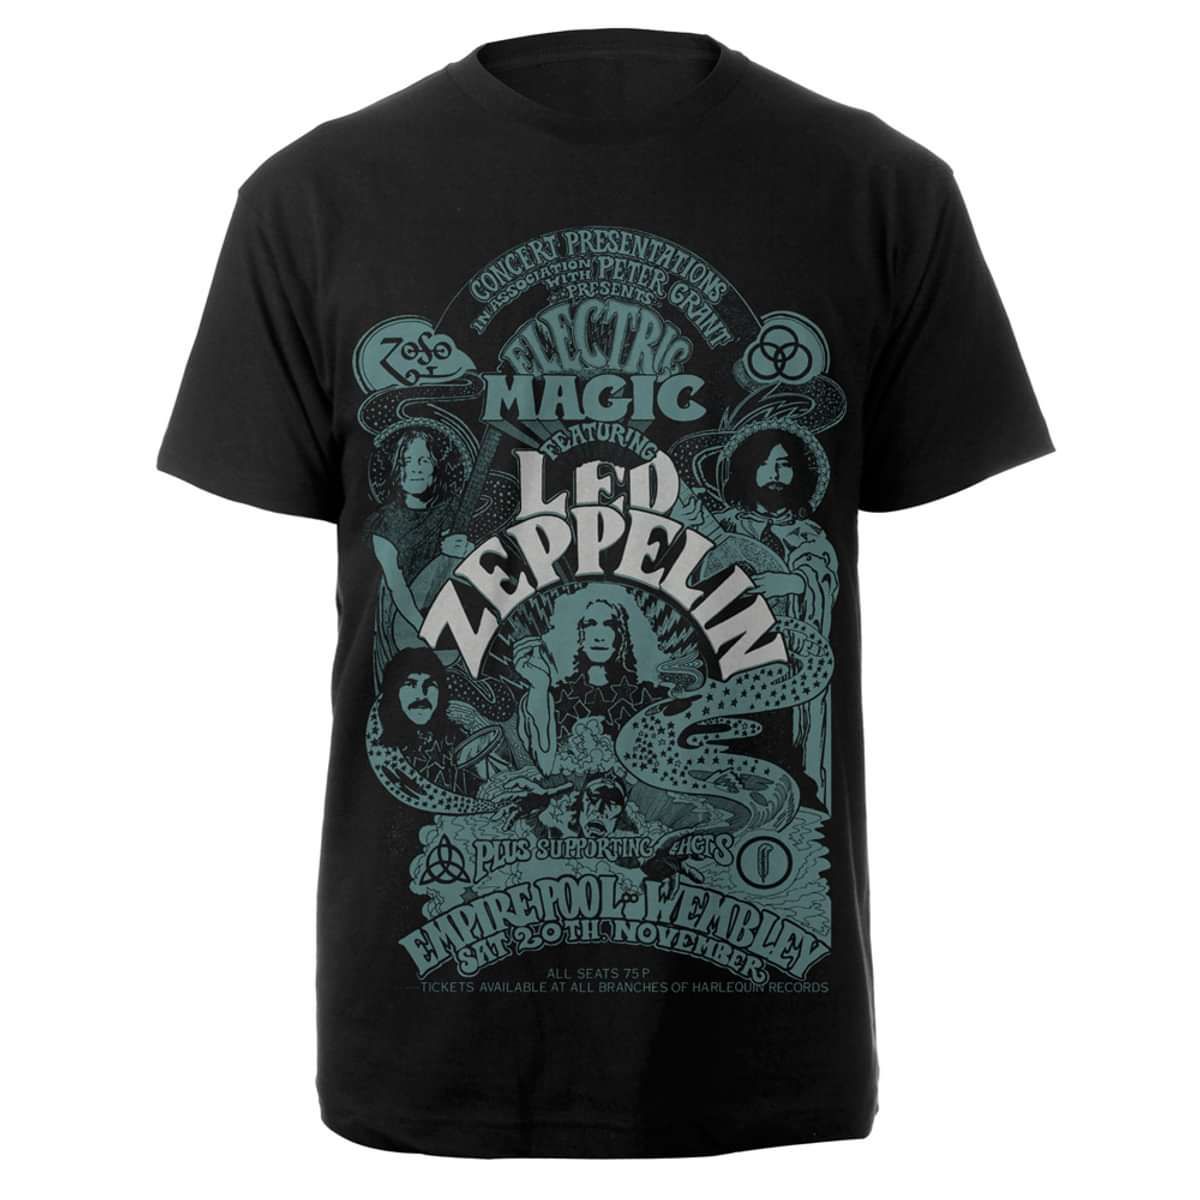 Electric Magic Black T-Shirt - Led Zeppelin